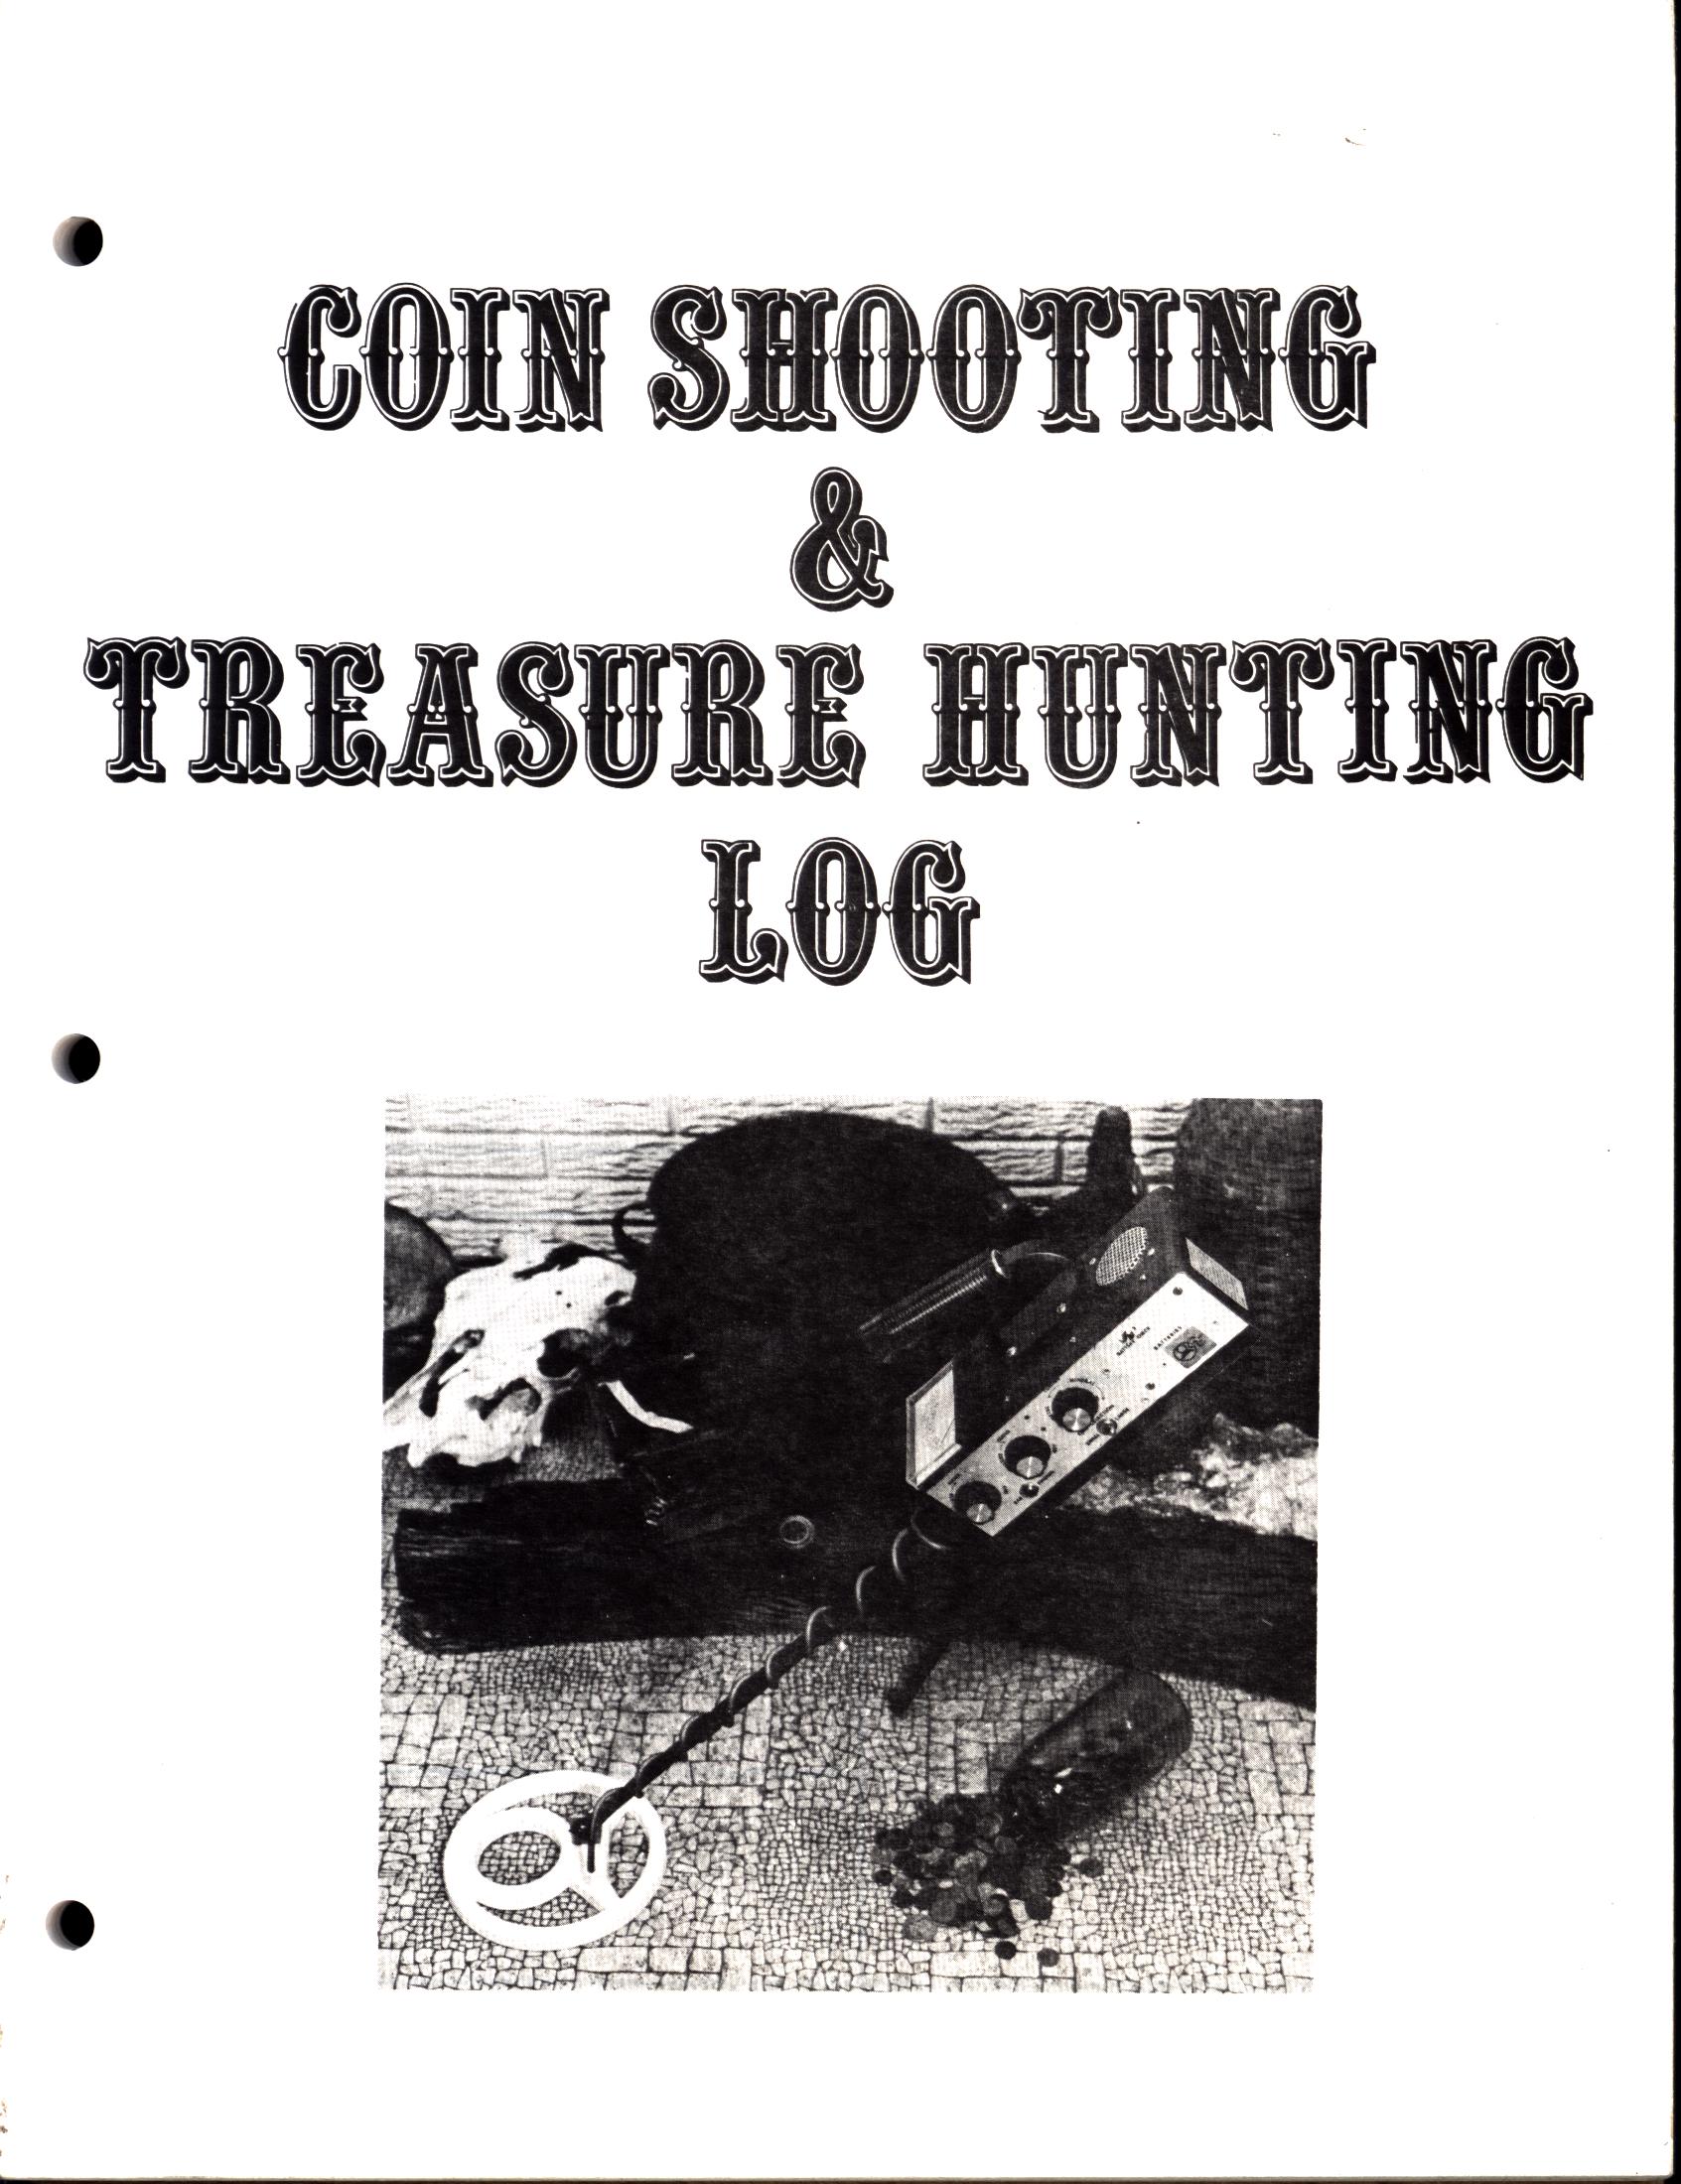 COIN SHOOTING & TRASURE HUNTING LOG.